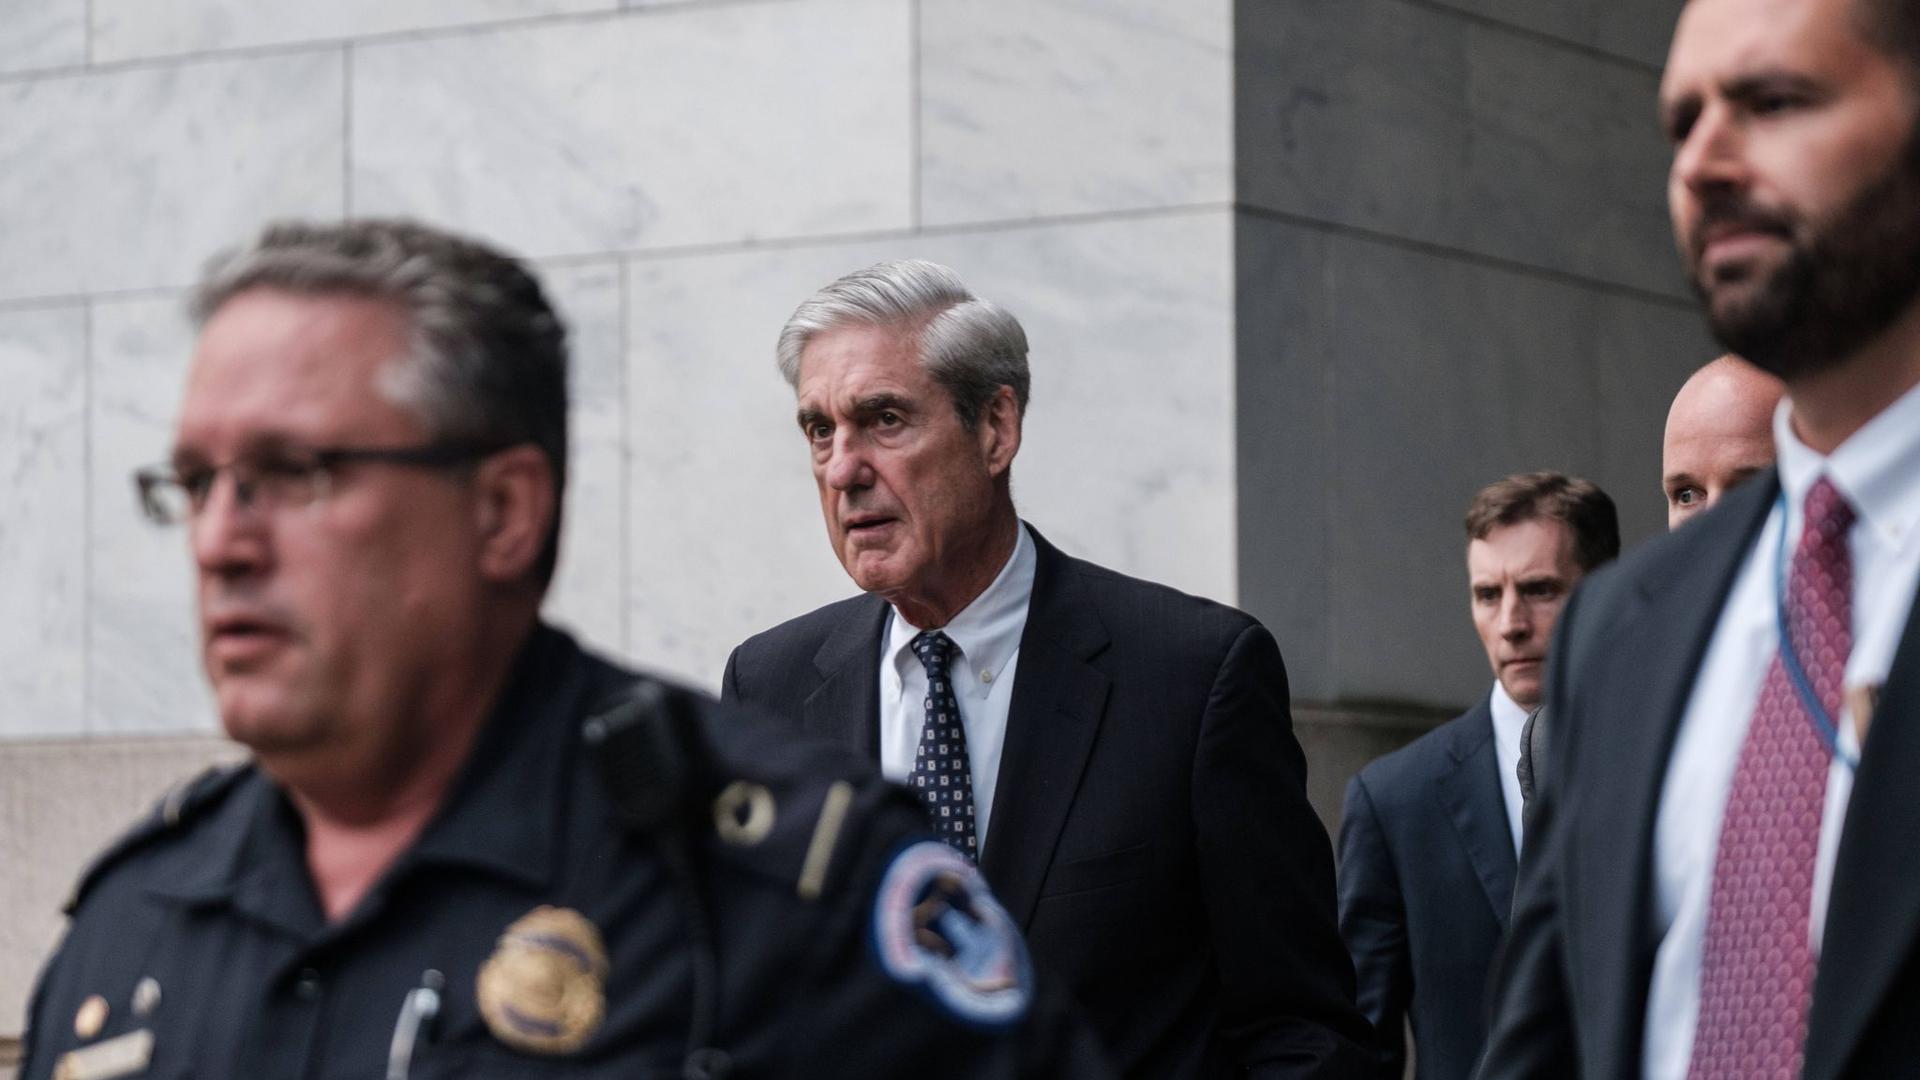 Soll erneut vor dem US-Kongress aussagen: Der frühere FBI-Sonderermittler Robert Mueller.